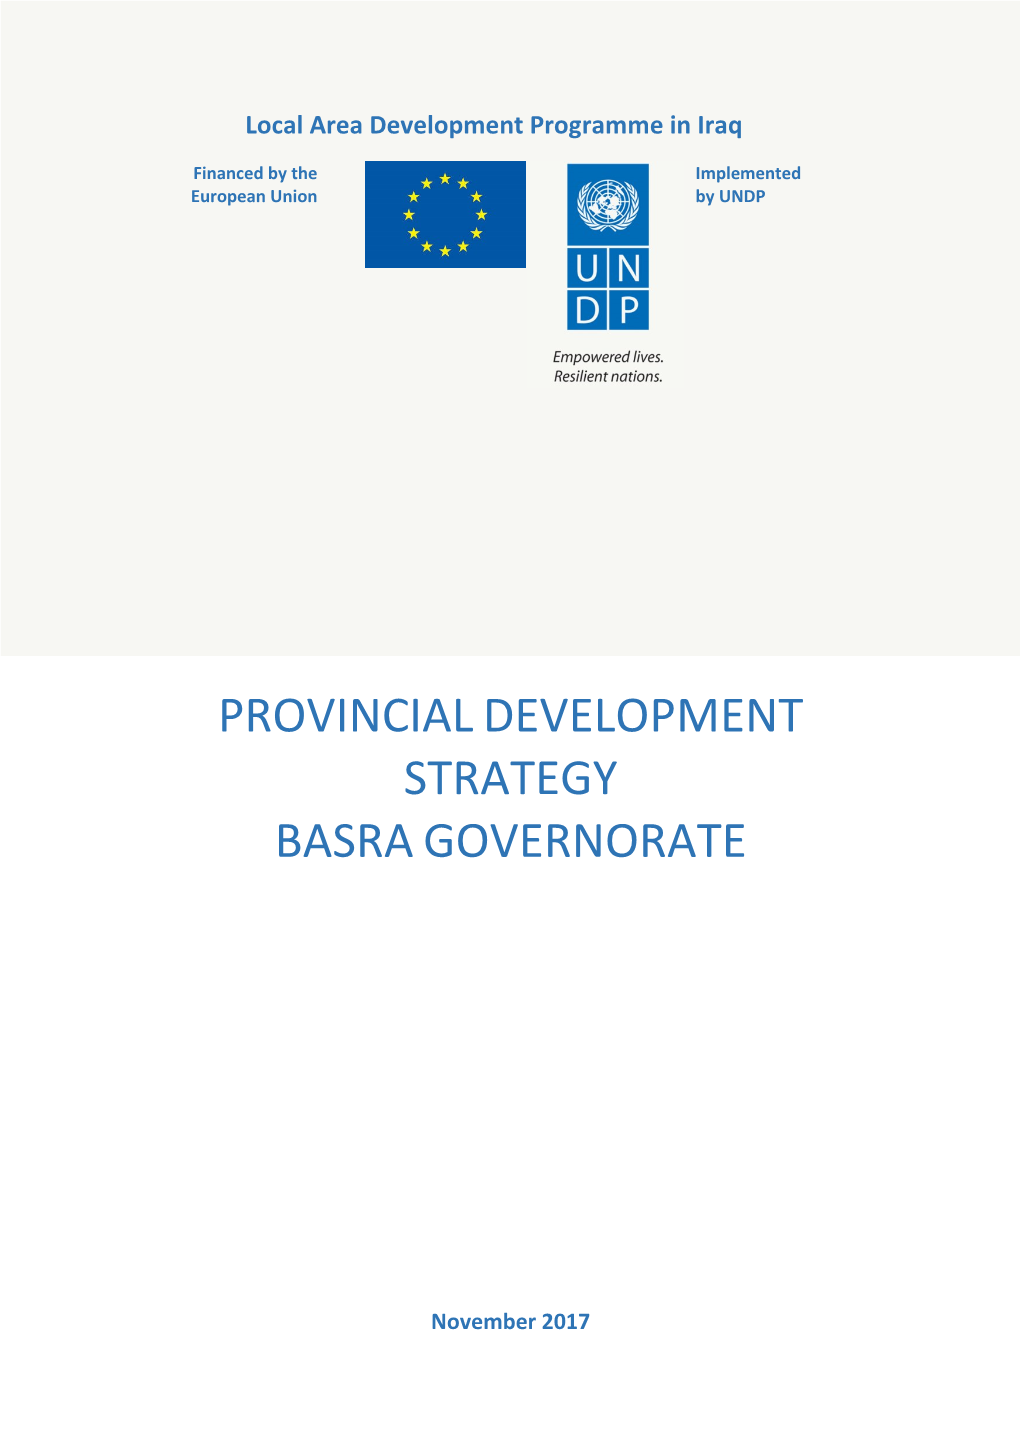 Provincialdevelopment Strategy Basragovernorate